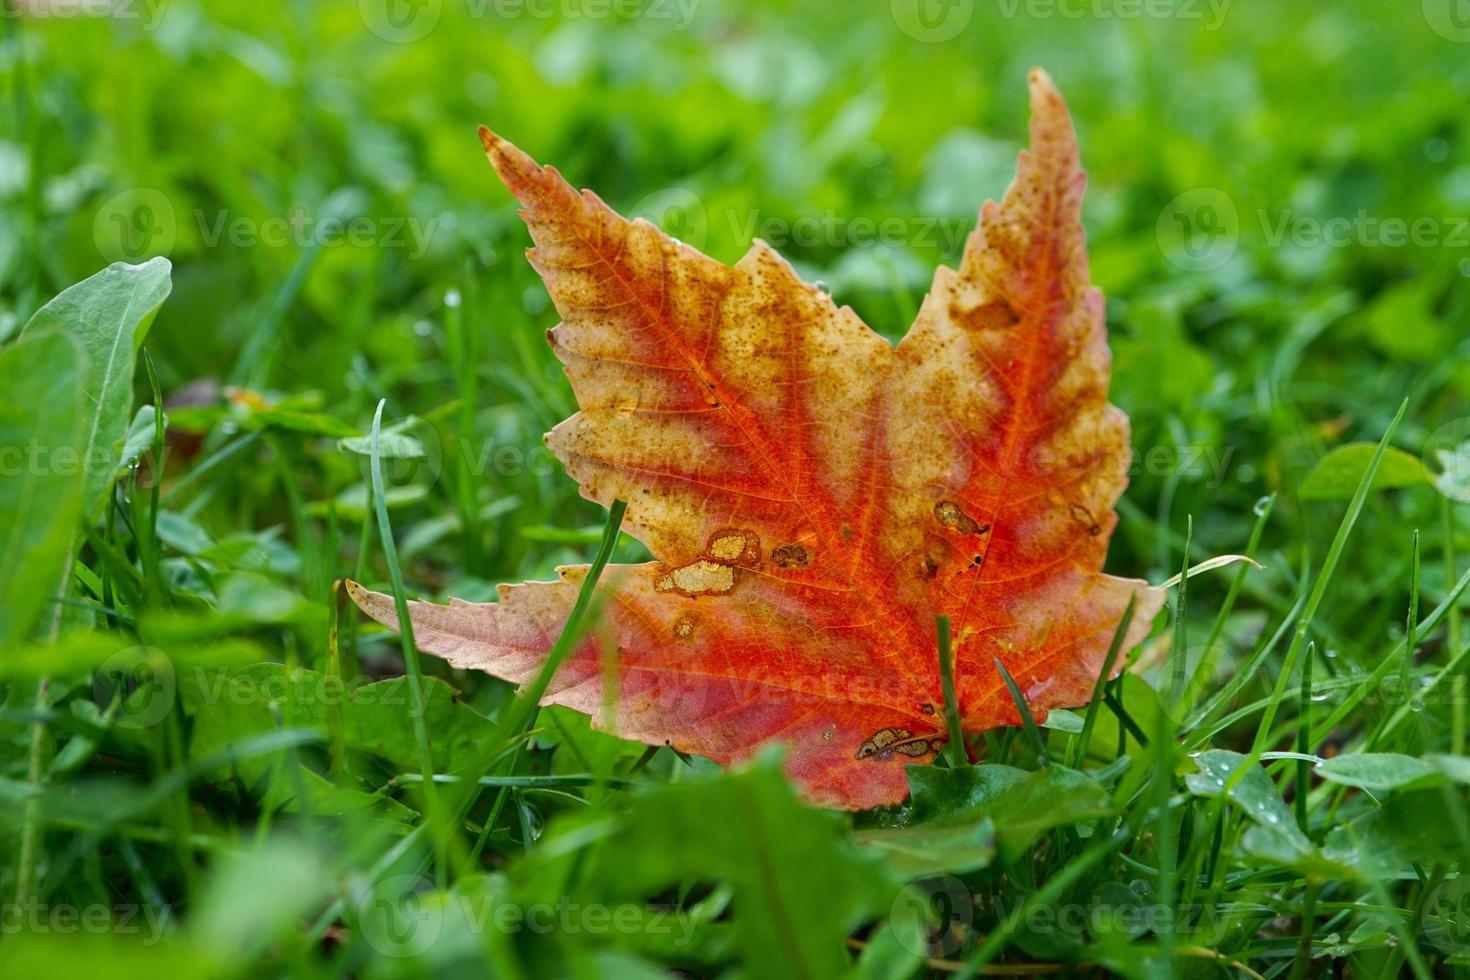 red maple leaf in autumn season photo